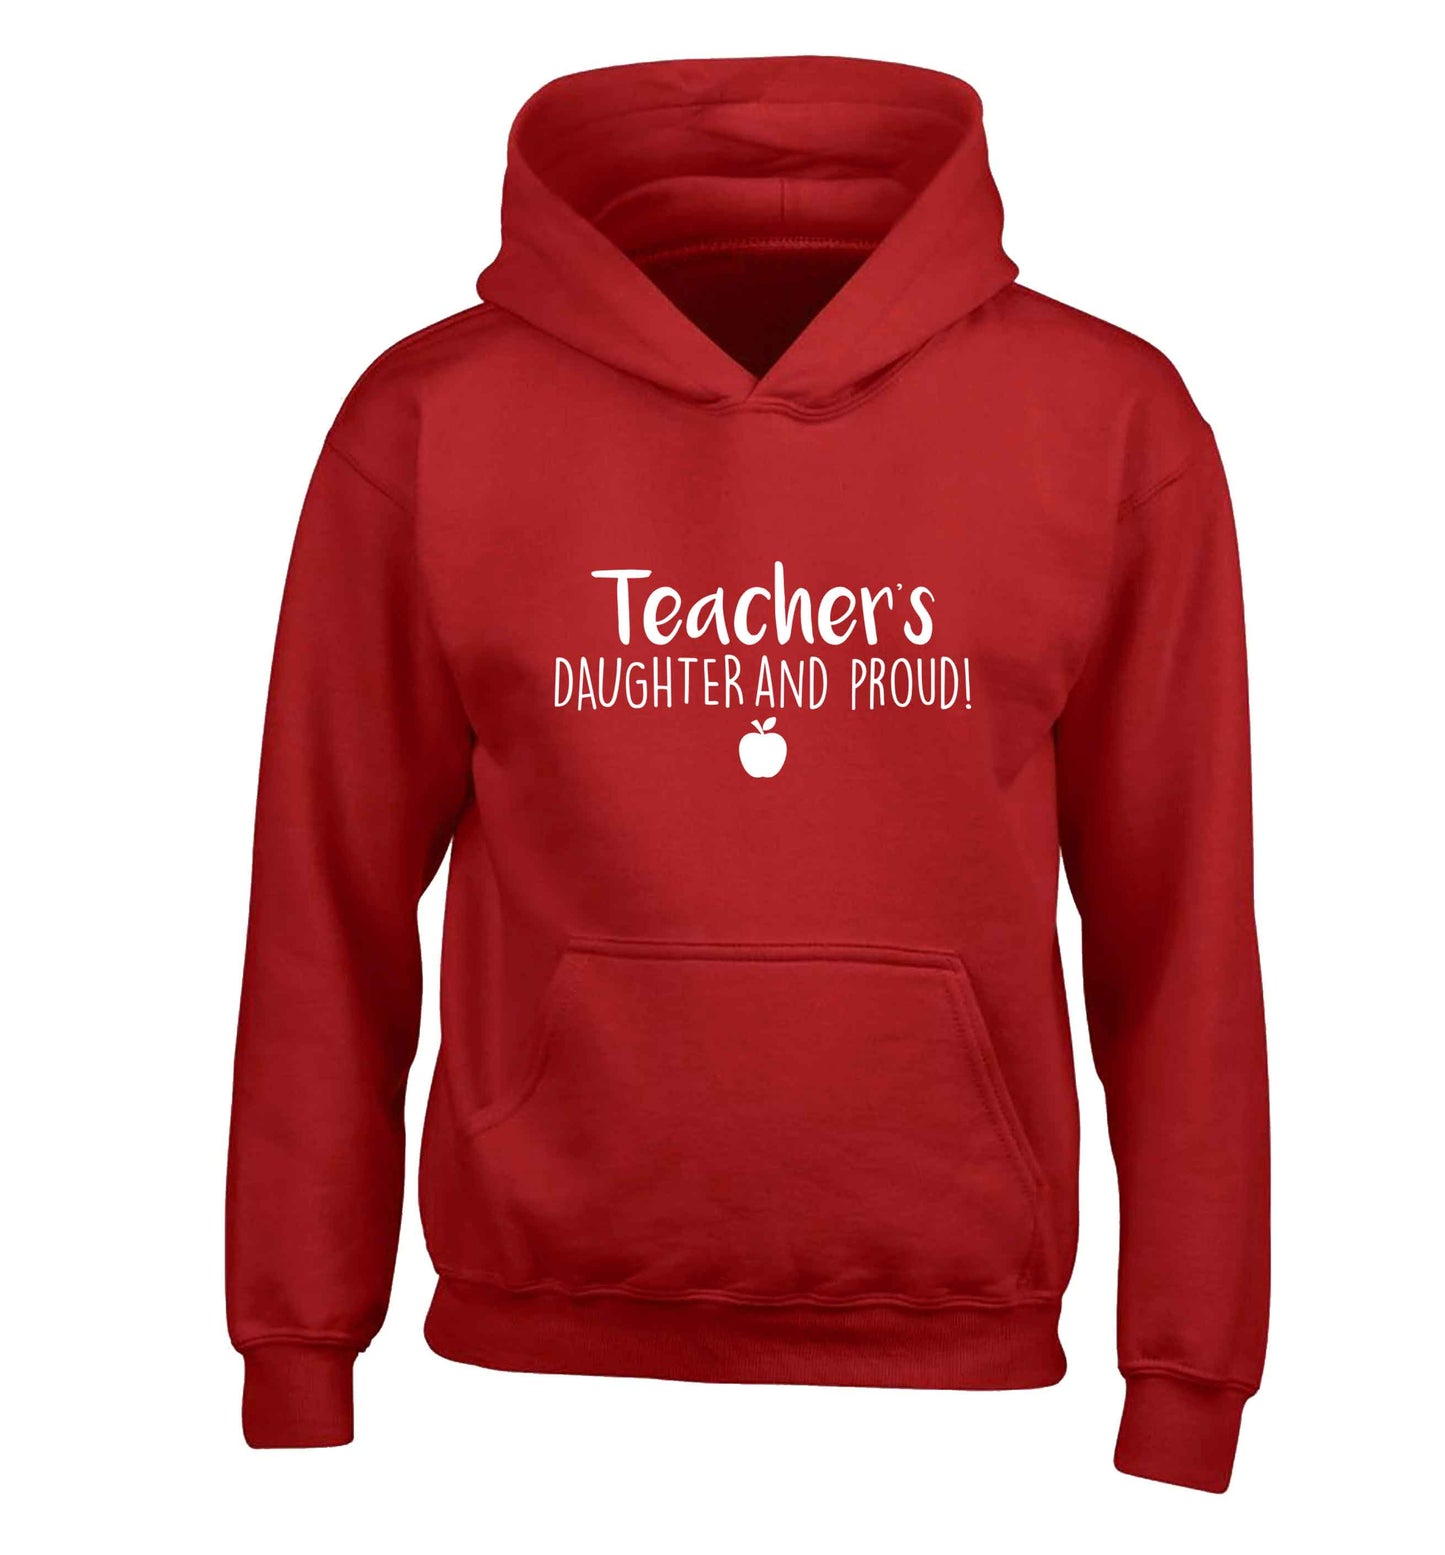 Teachers daughter and proud children's red hoodie 12-13 Years